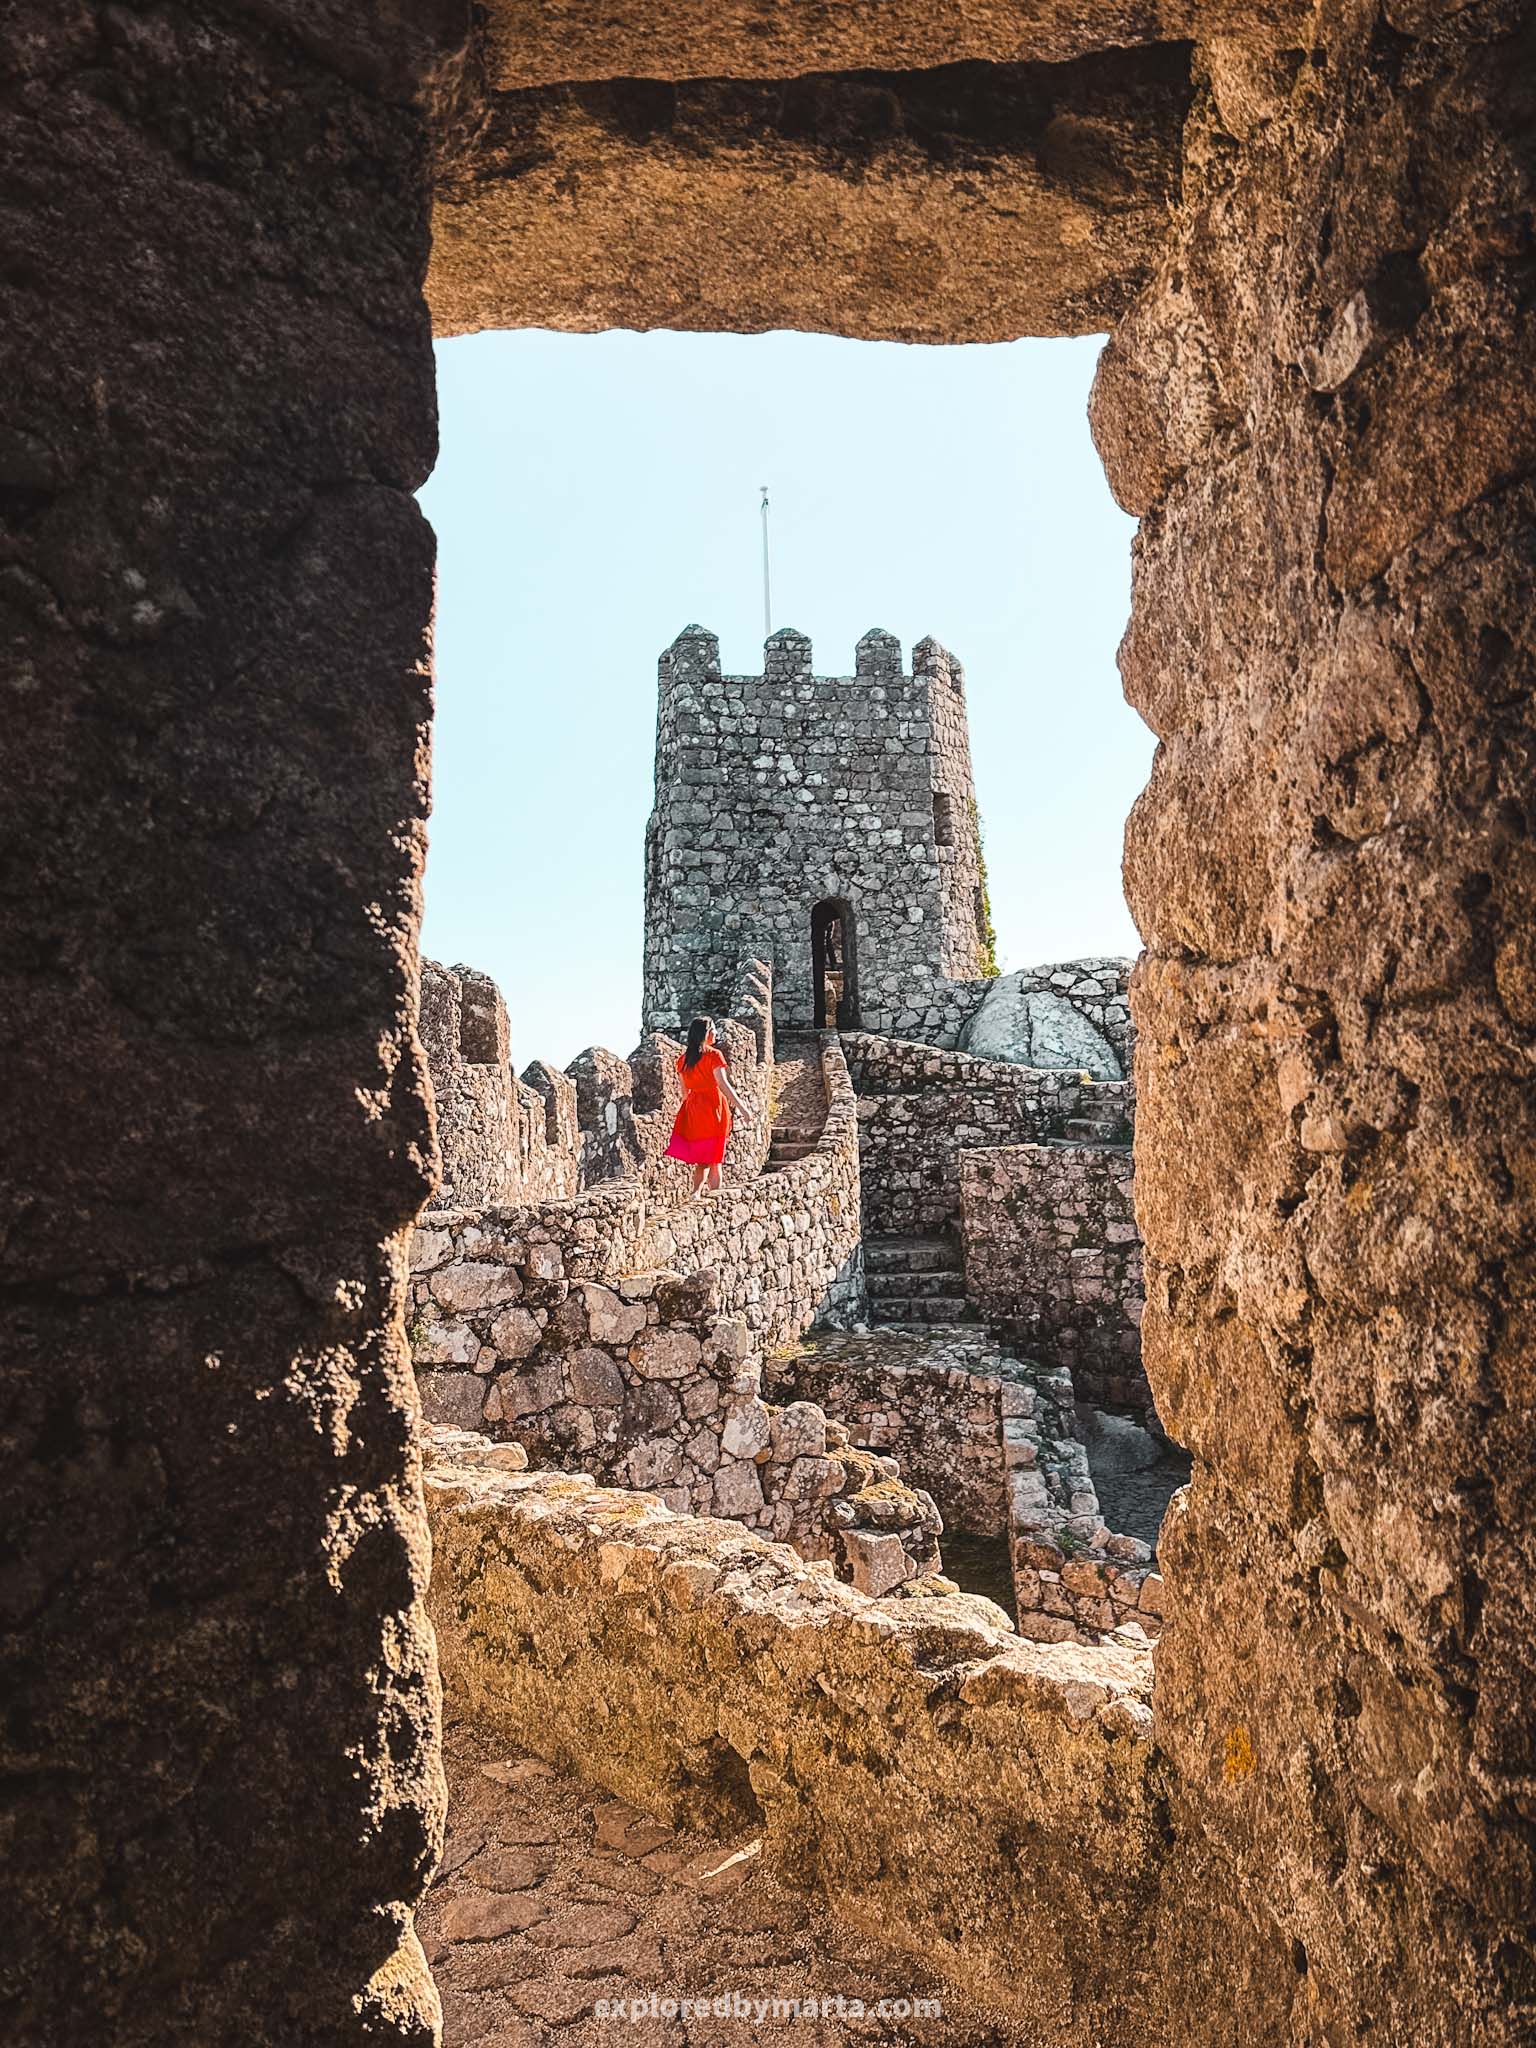 Sintra, Portugal-Castelo dos Mouros, Moorish Castle Instagram spots in Sintra